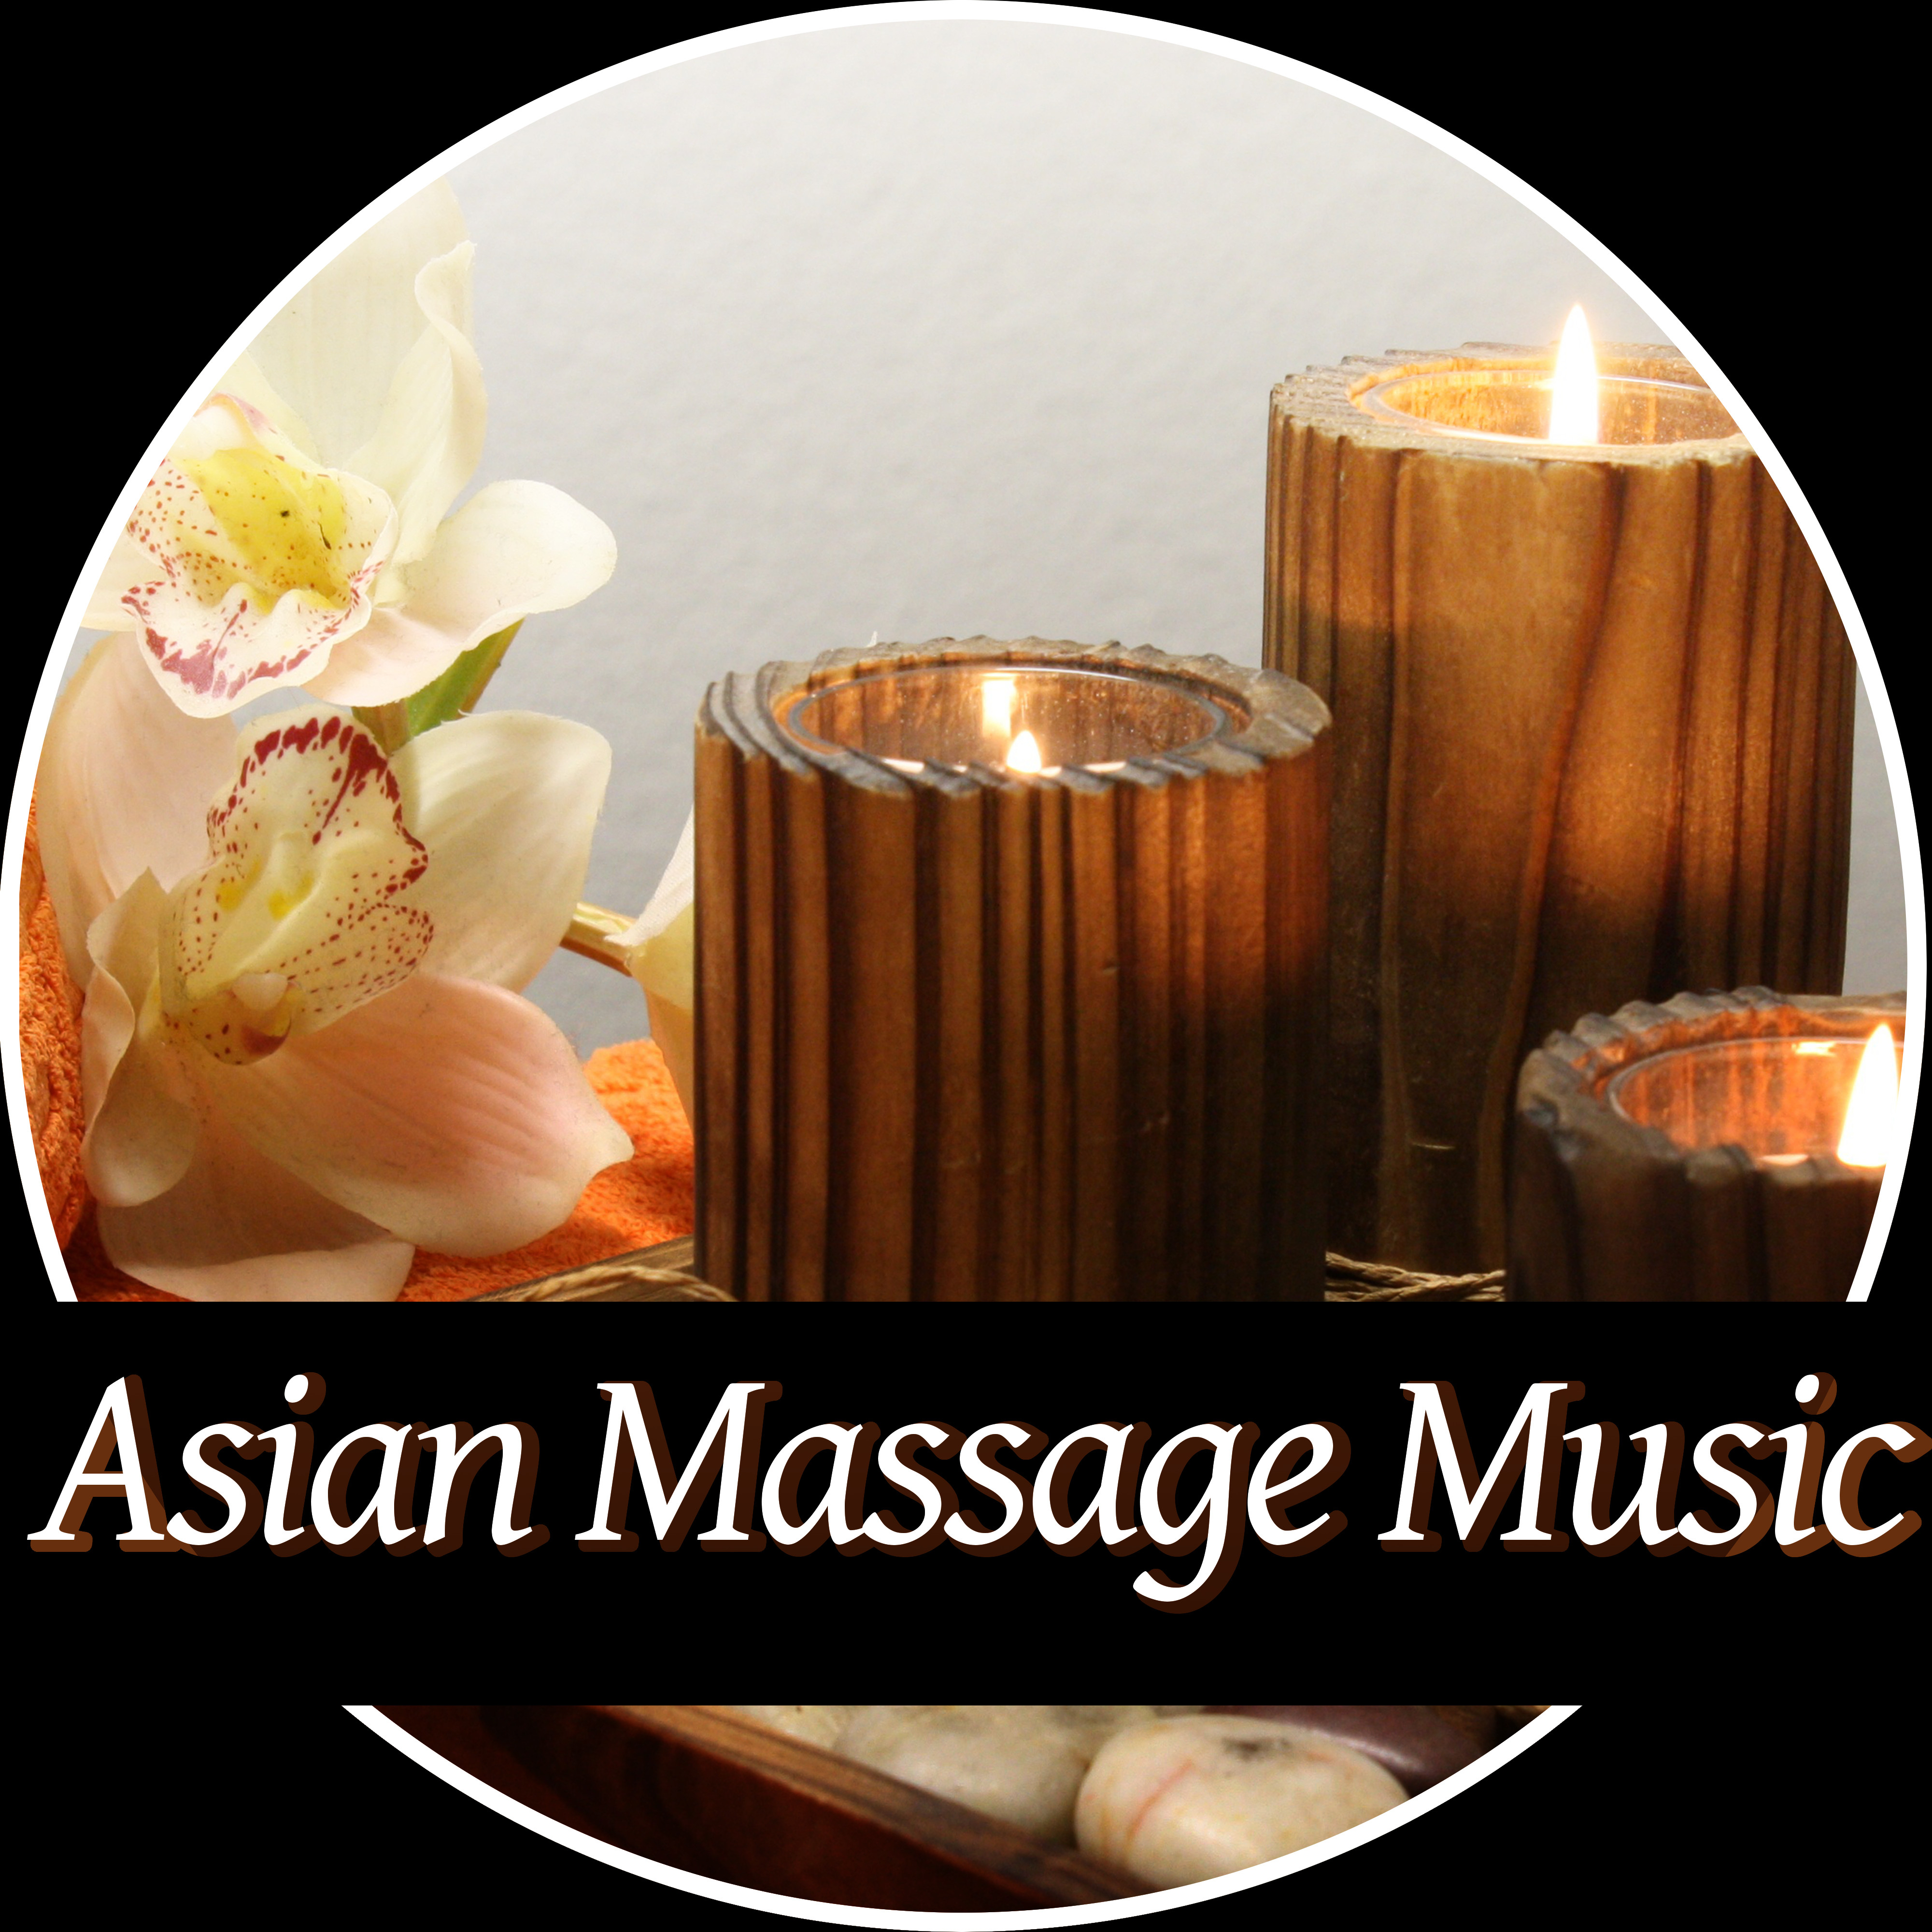 Asian Massage Music  Asia Oriental, Face Massage Music, Nature Sound, Ambient Music, Thai Spa Music, Peaceful Music